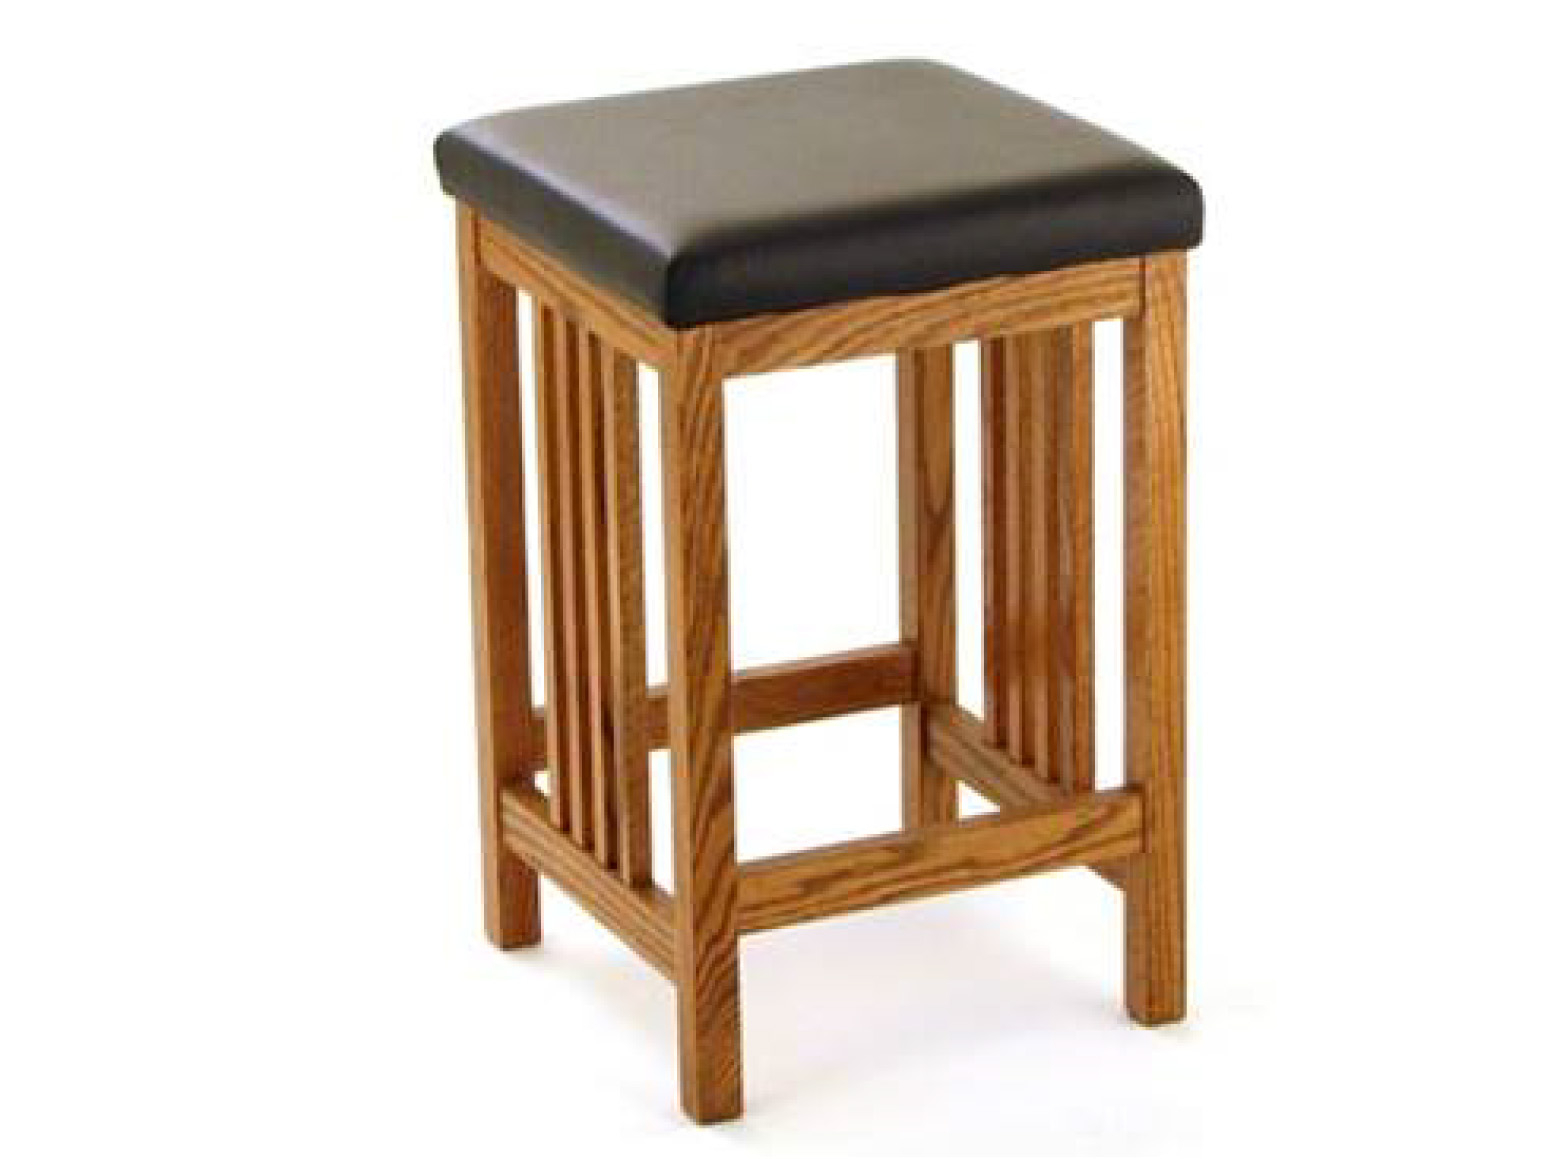 Mission style bar stools 18